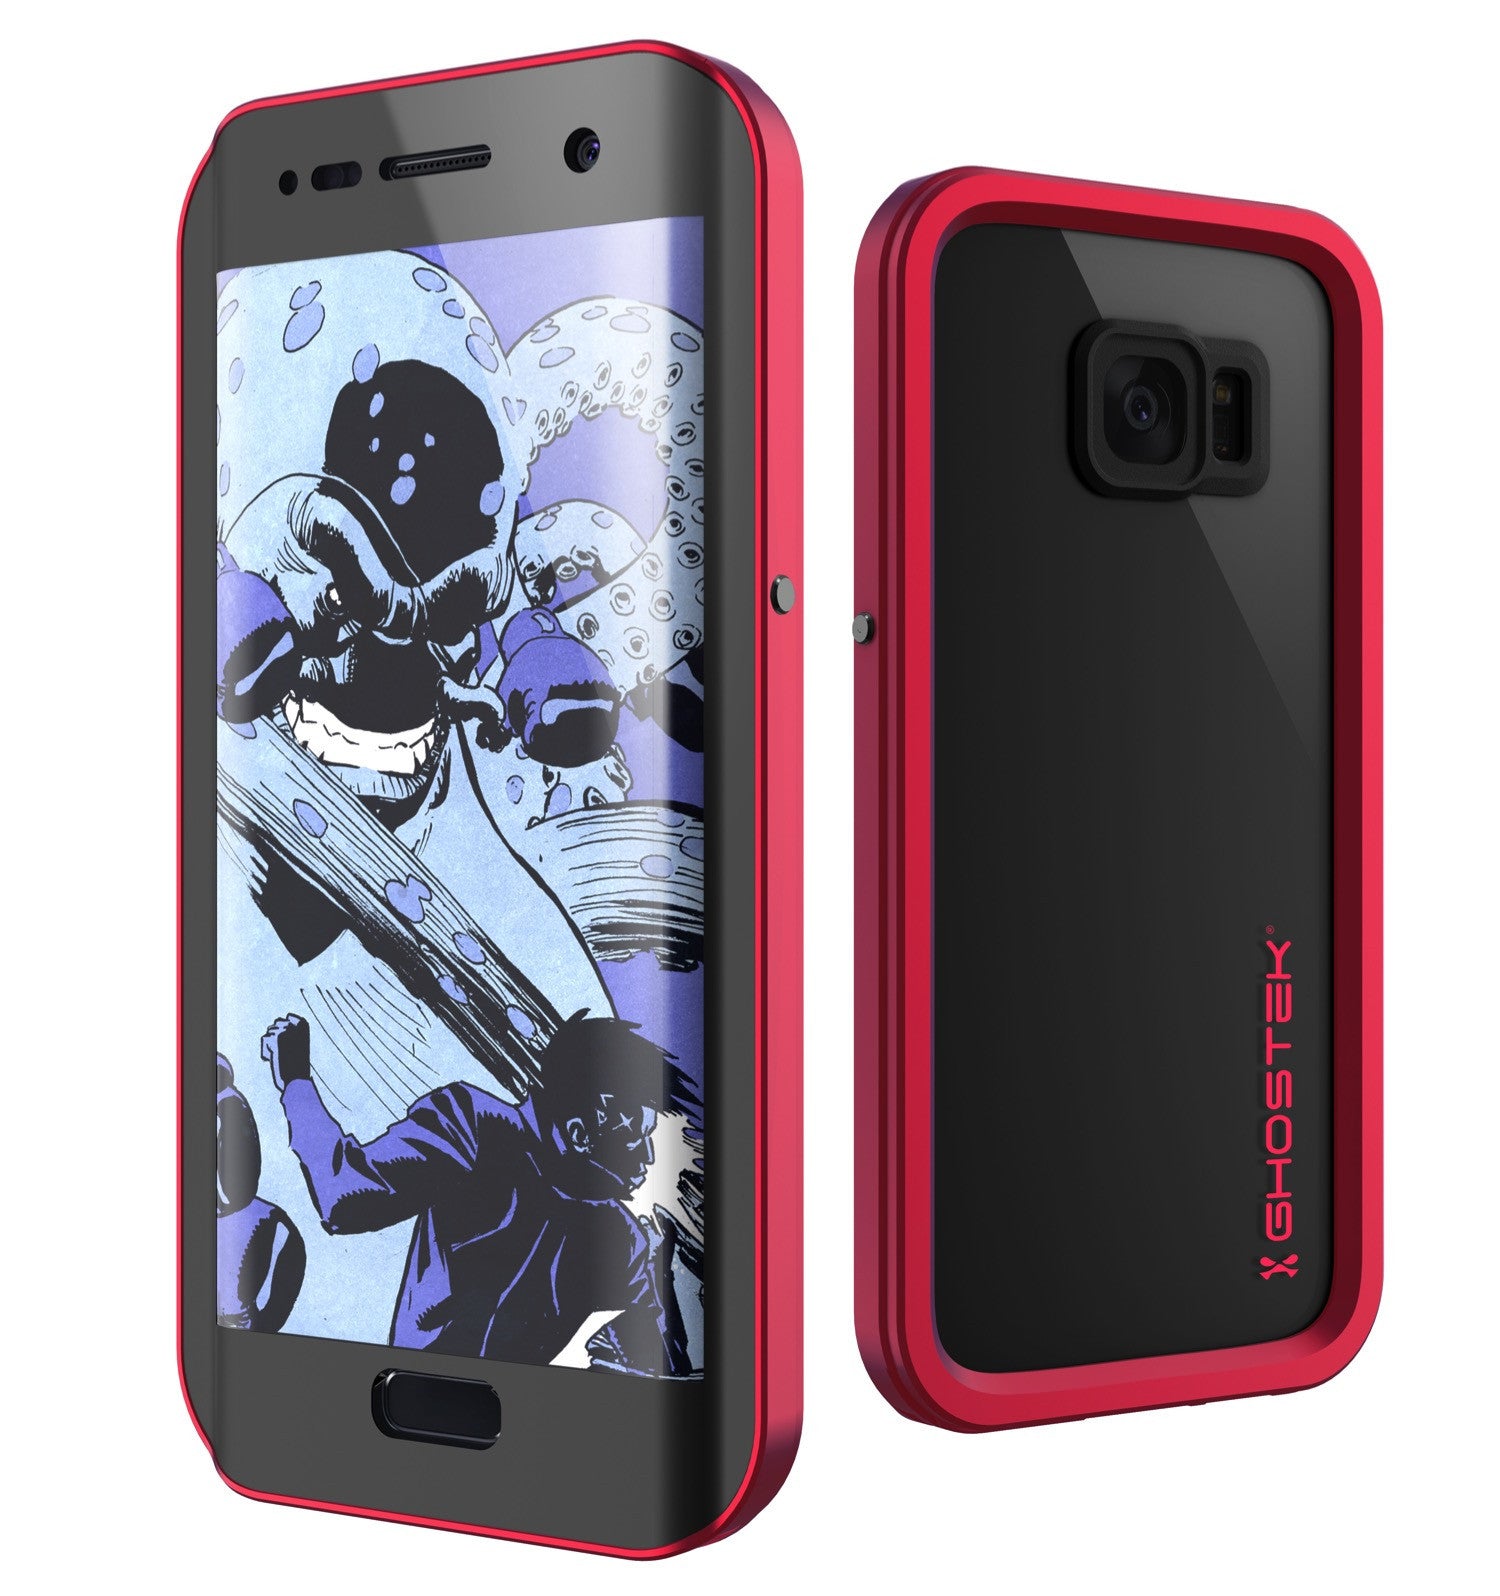 Galaxy S7 EDGE Waterproof Case, Ghostek Atomic 2.0 Red Shock/Dirt/Snow Proof | Lifetime Warranty (Color in image: Red)